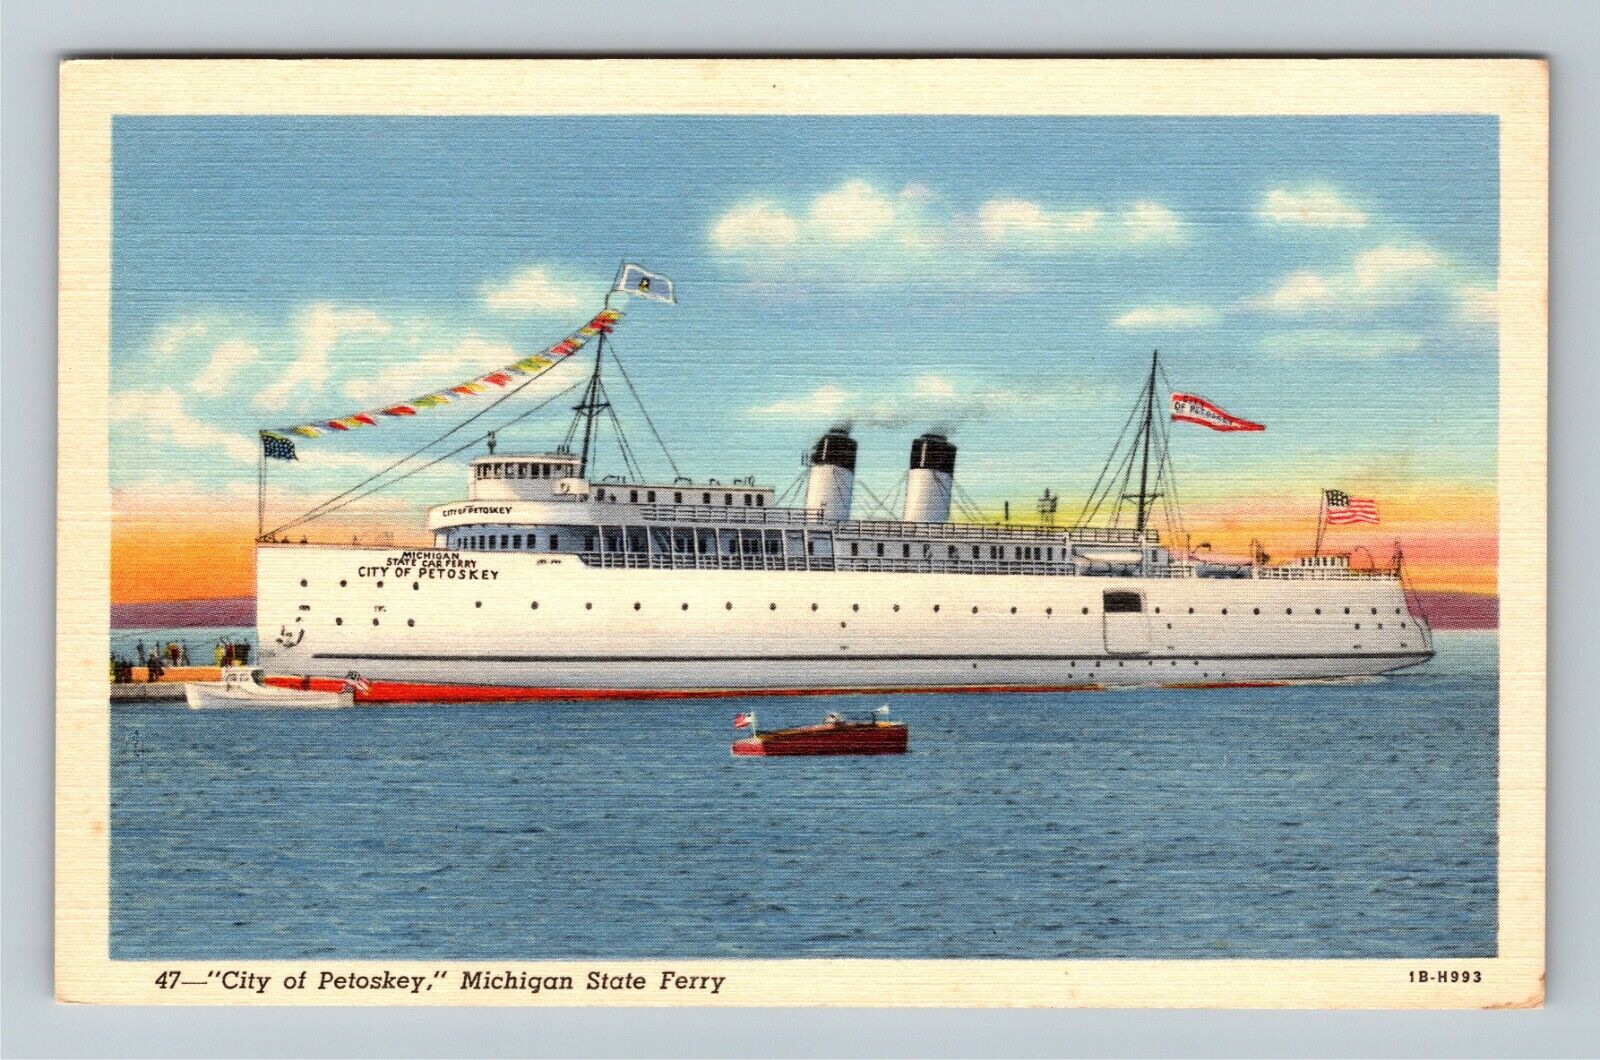 City Petoskey, Michigan State Ferry, Vintage Postcard